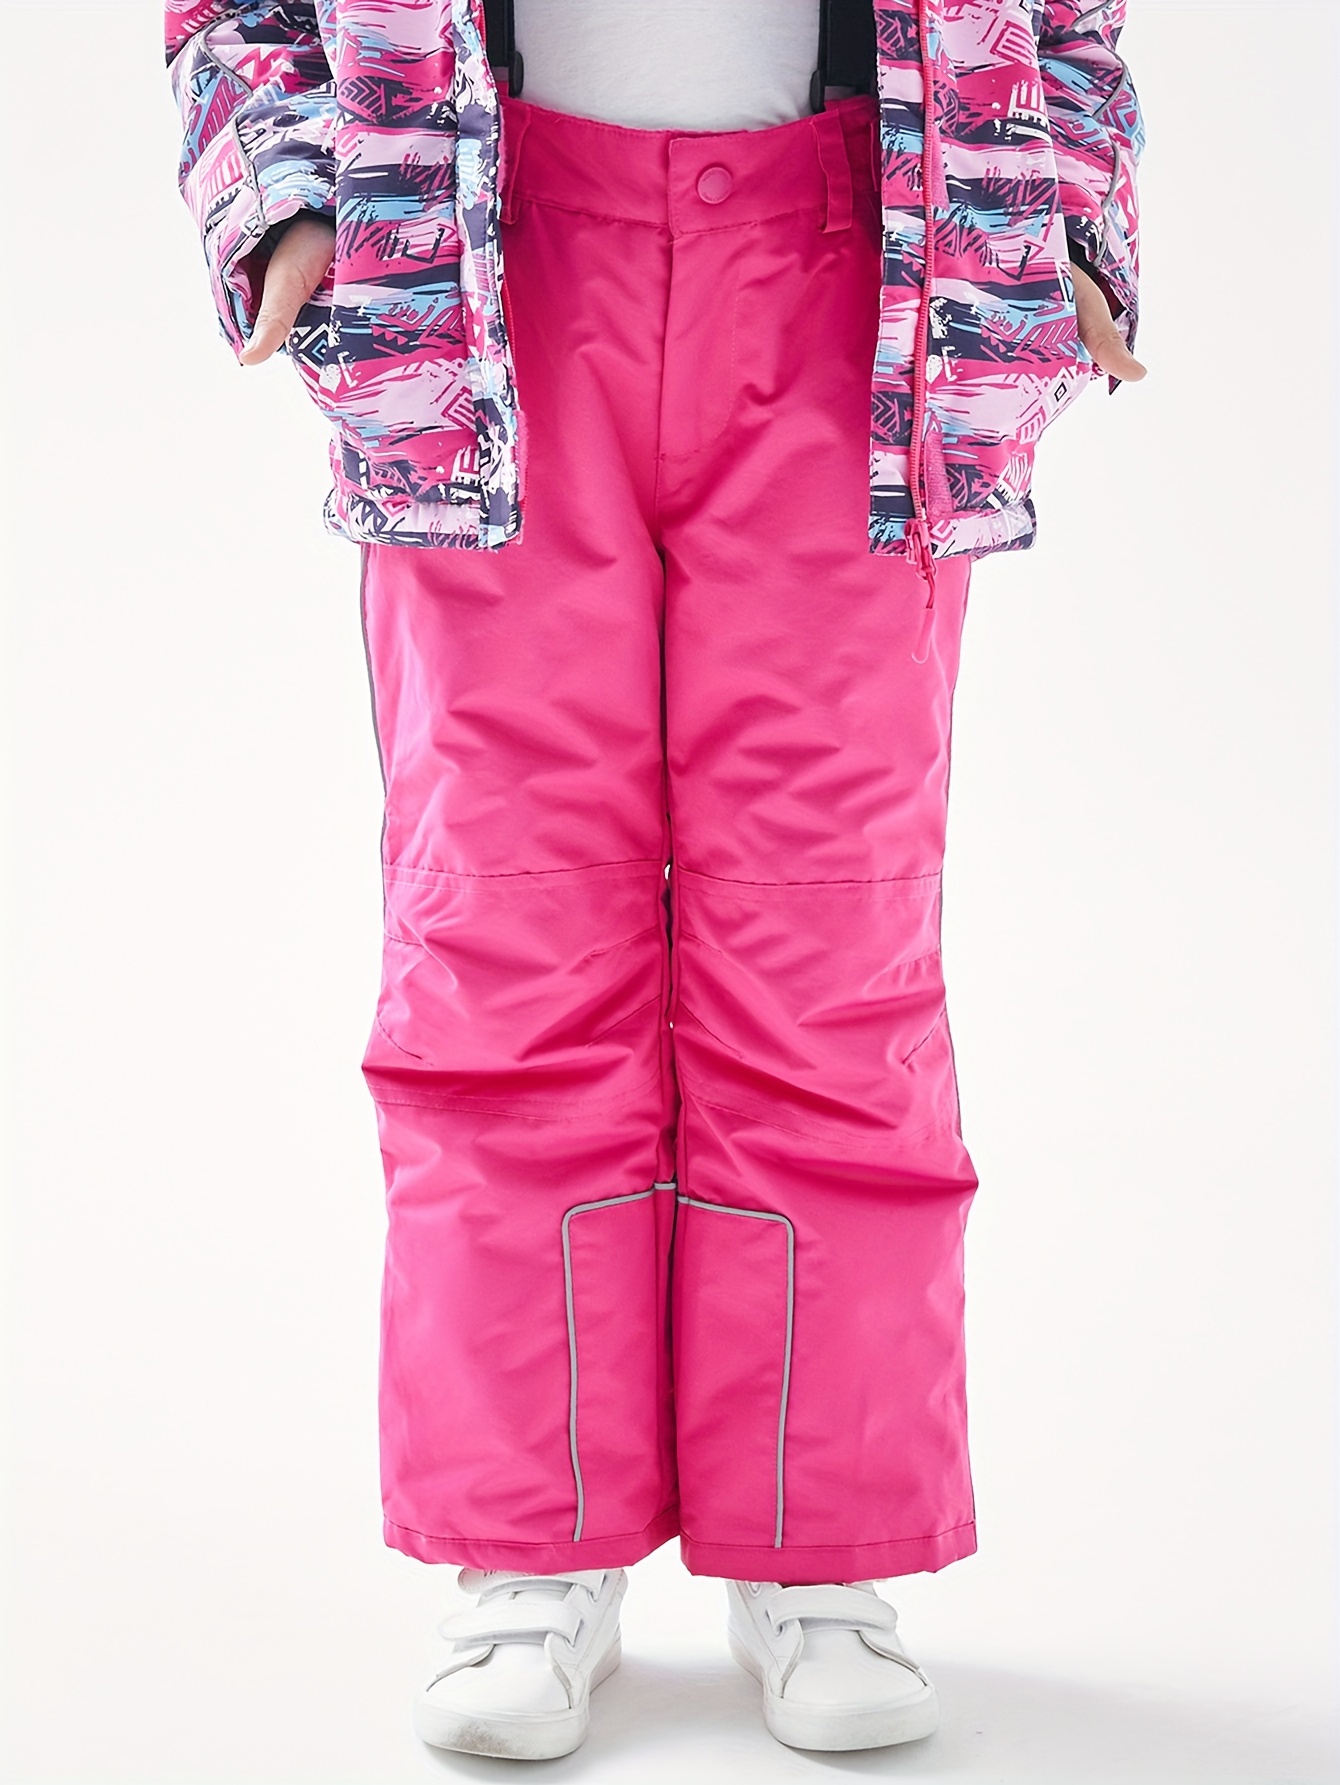 Women's Snow Pants, Camo Pattern Thermal Snow Bibs With Belt, Muti Pockets  Waterproof & Windproof Ski & Snowboard Bib Pants